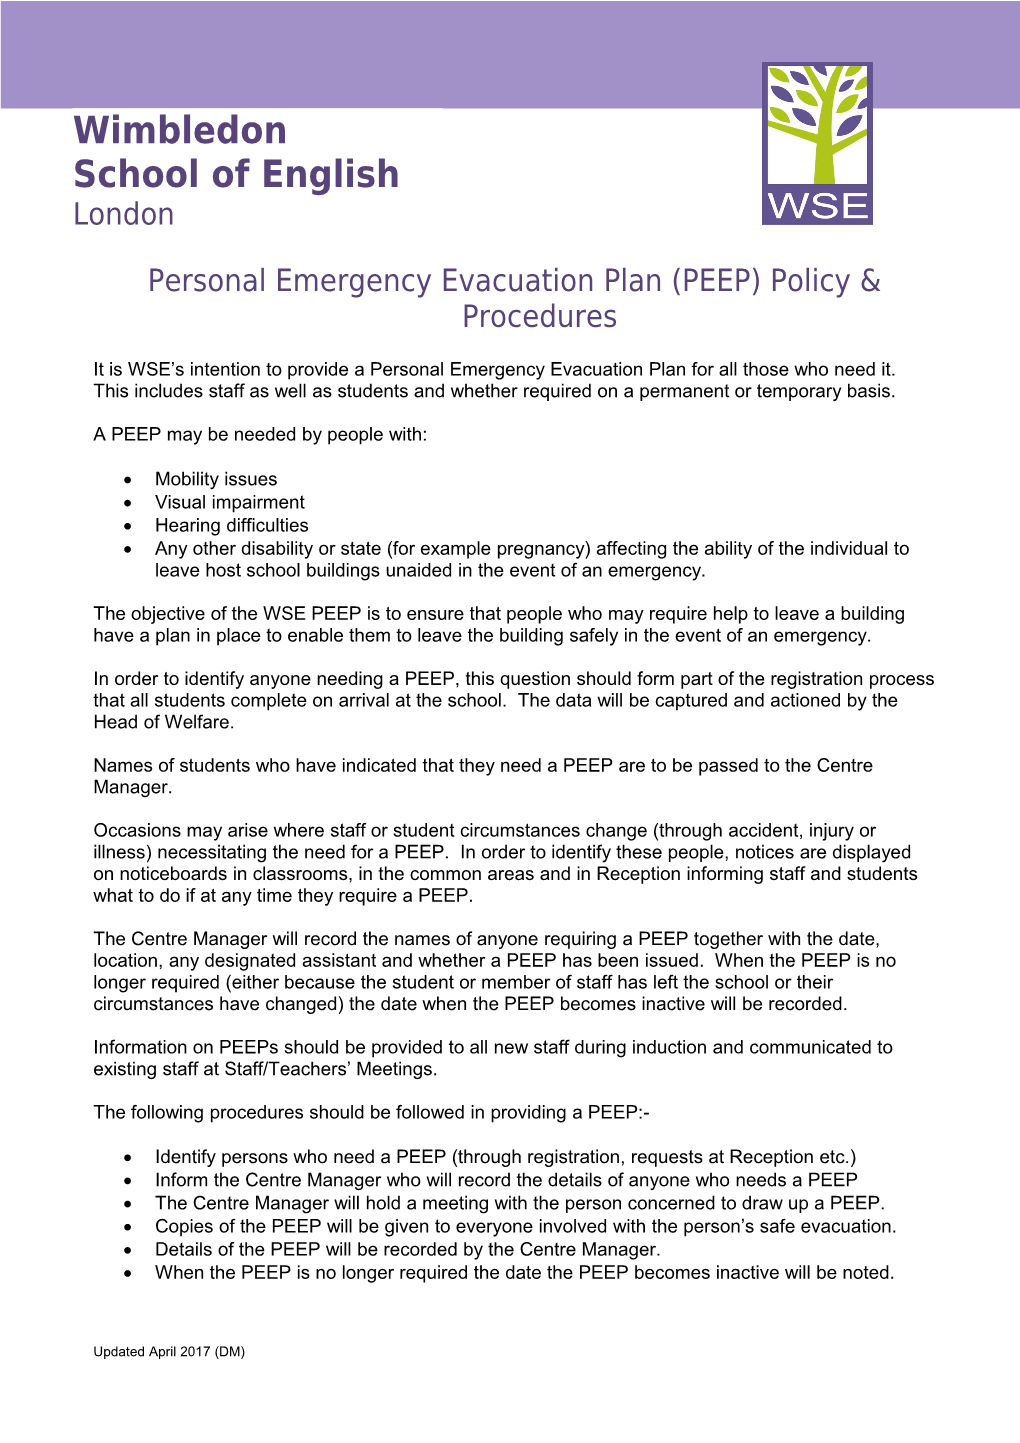 Personal Emergency Evacuation Plan (PEEP) Policy & Procedures